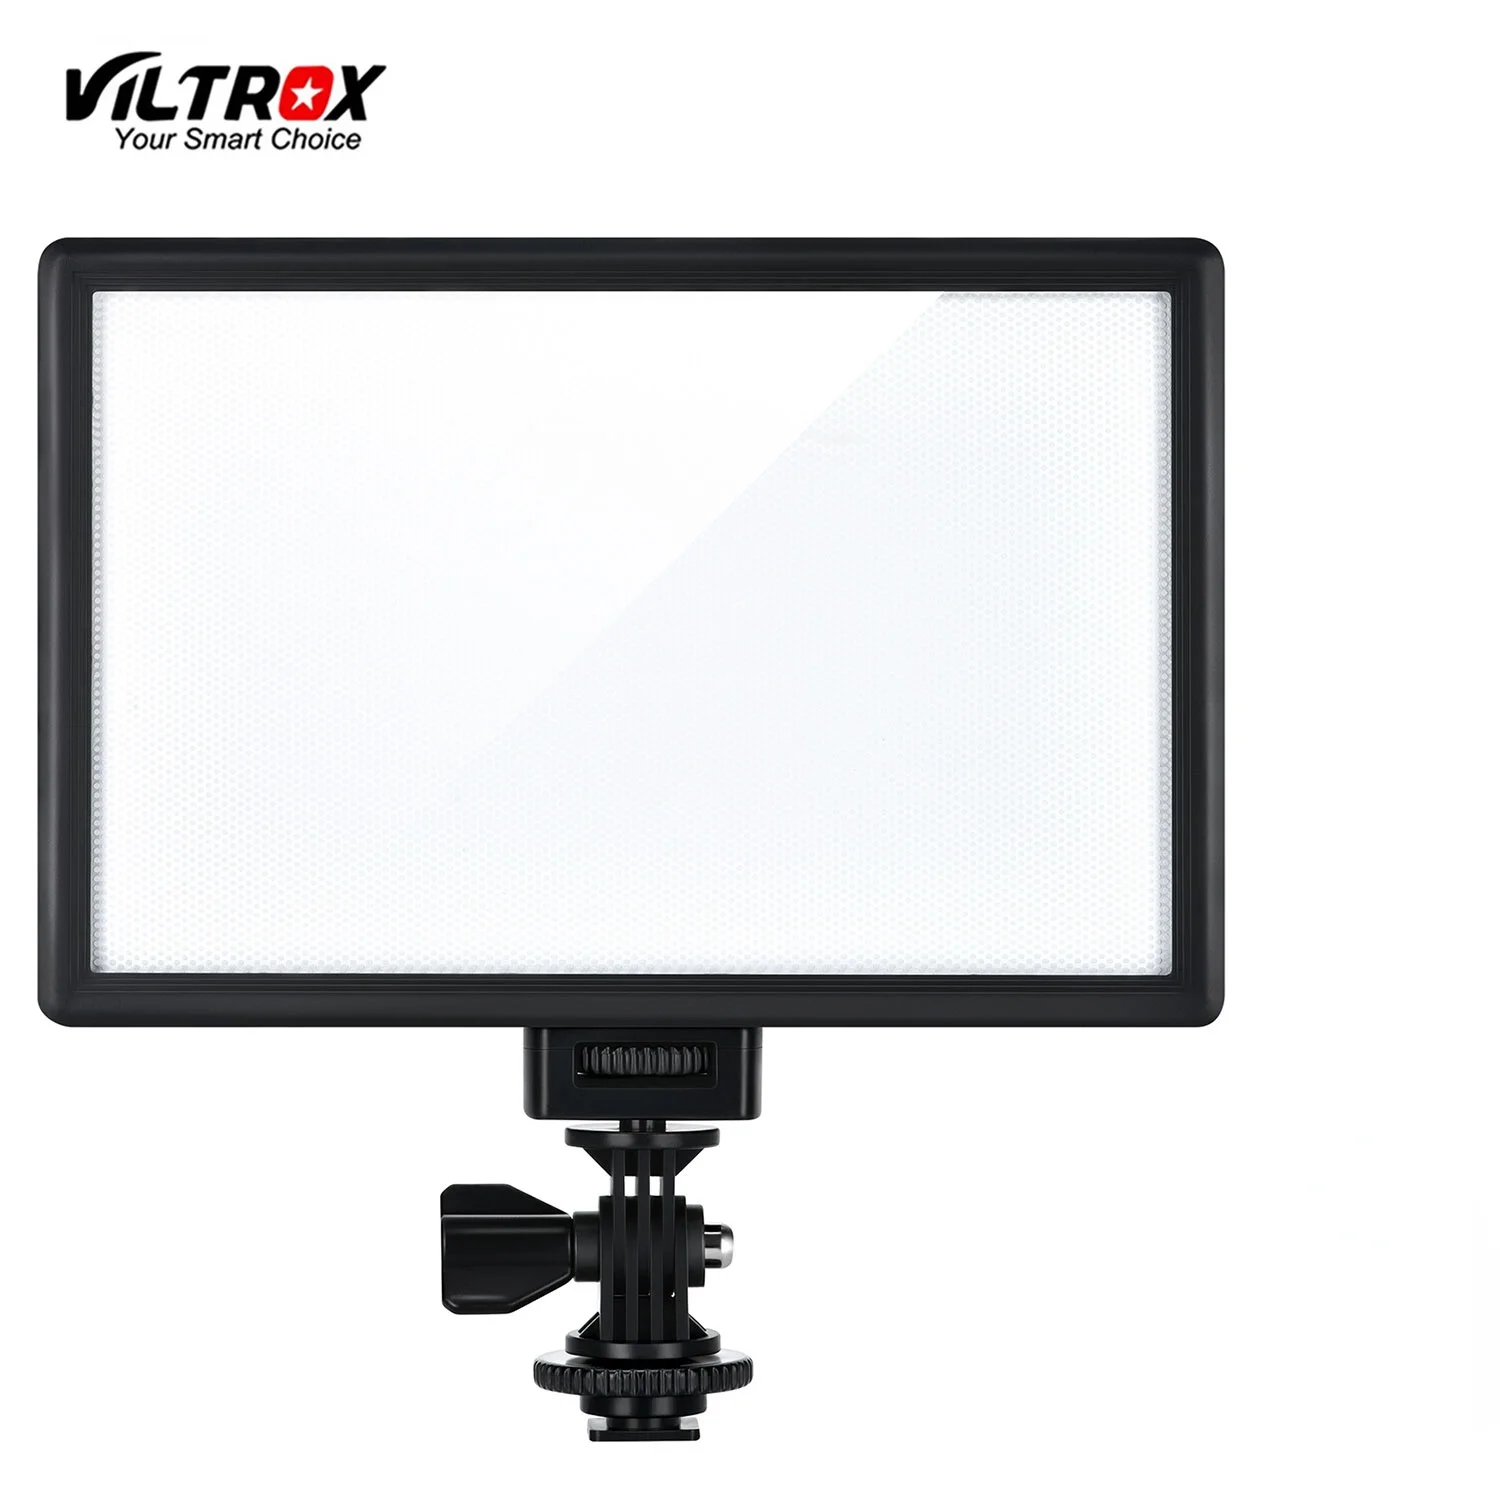 

Viltrox L116T LED Video Light Bi-Color Dimmable Slim DSLR Portable Selfie Light Kit for Camera Facebook YouTube Sho